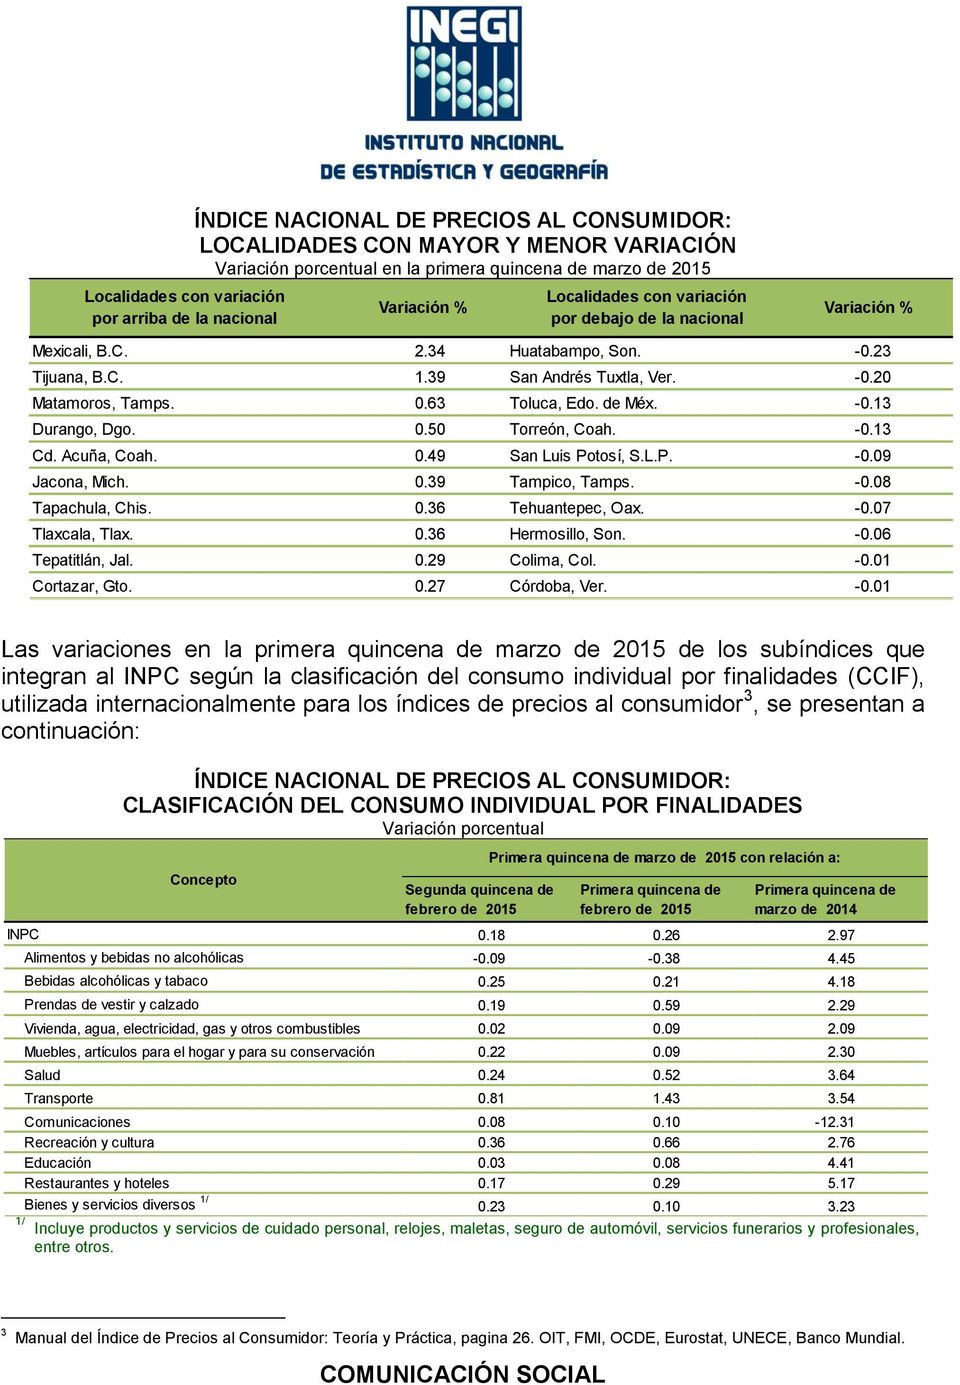 63 Toluca, Edo. de Méx. -0.13 Durango, Dgo. 0.50 Torreón, Coah. -0.13 Cd. Acuña, Coah. 0.49 San Luis Potosí, S.L.P. -0.09 Jacona, Mich. 0.39 Tampico, Tamps. -0.08 Tapachula, Chis. 0.36 Tehuantepec, Oax.